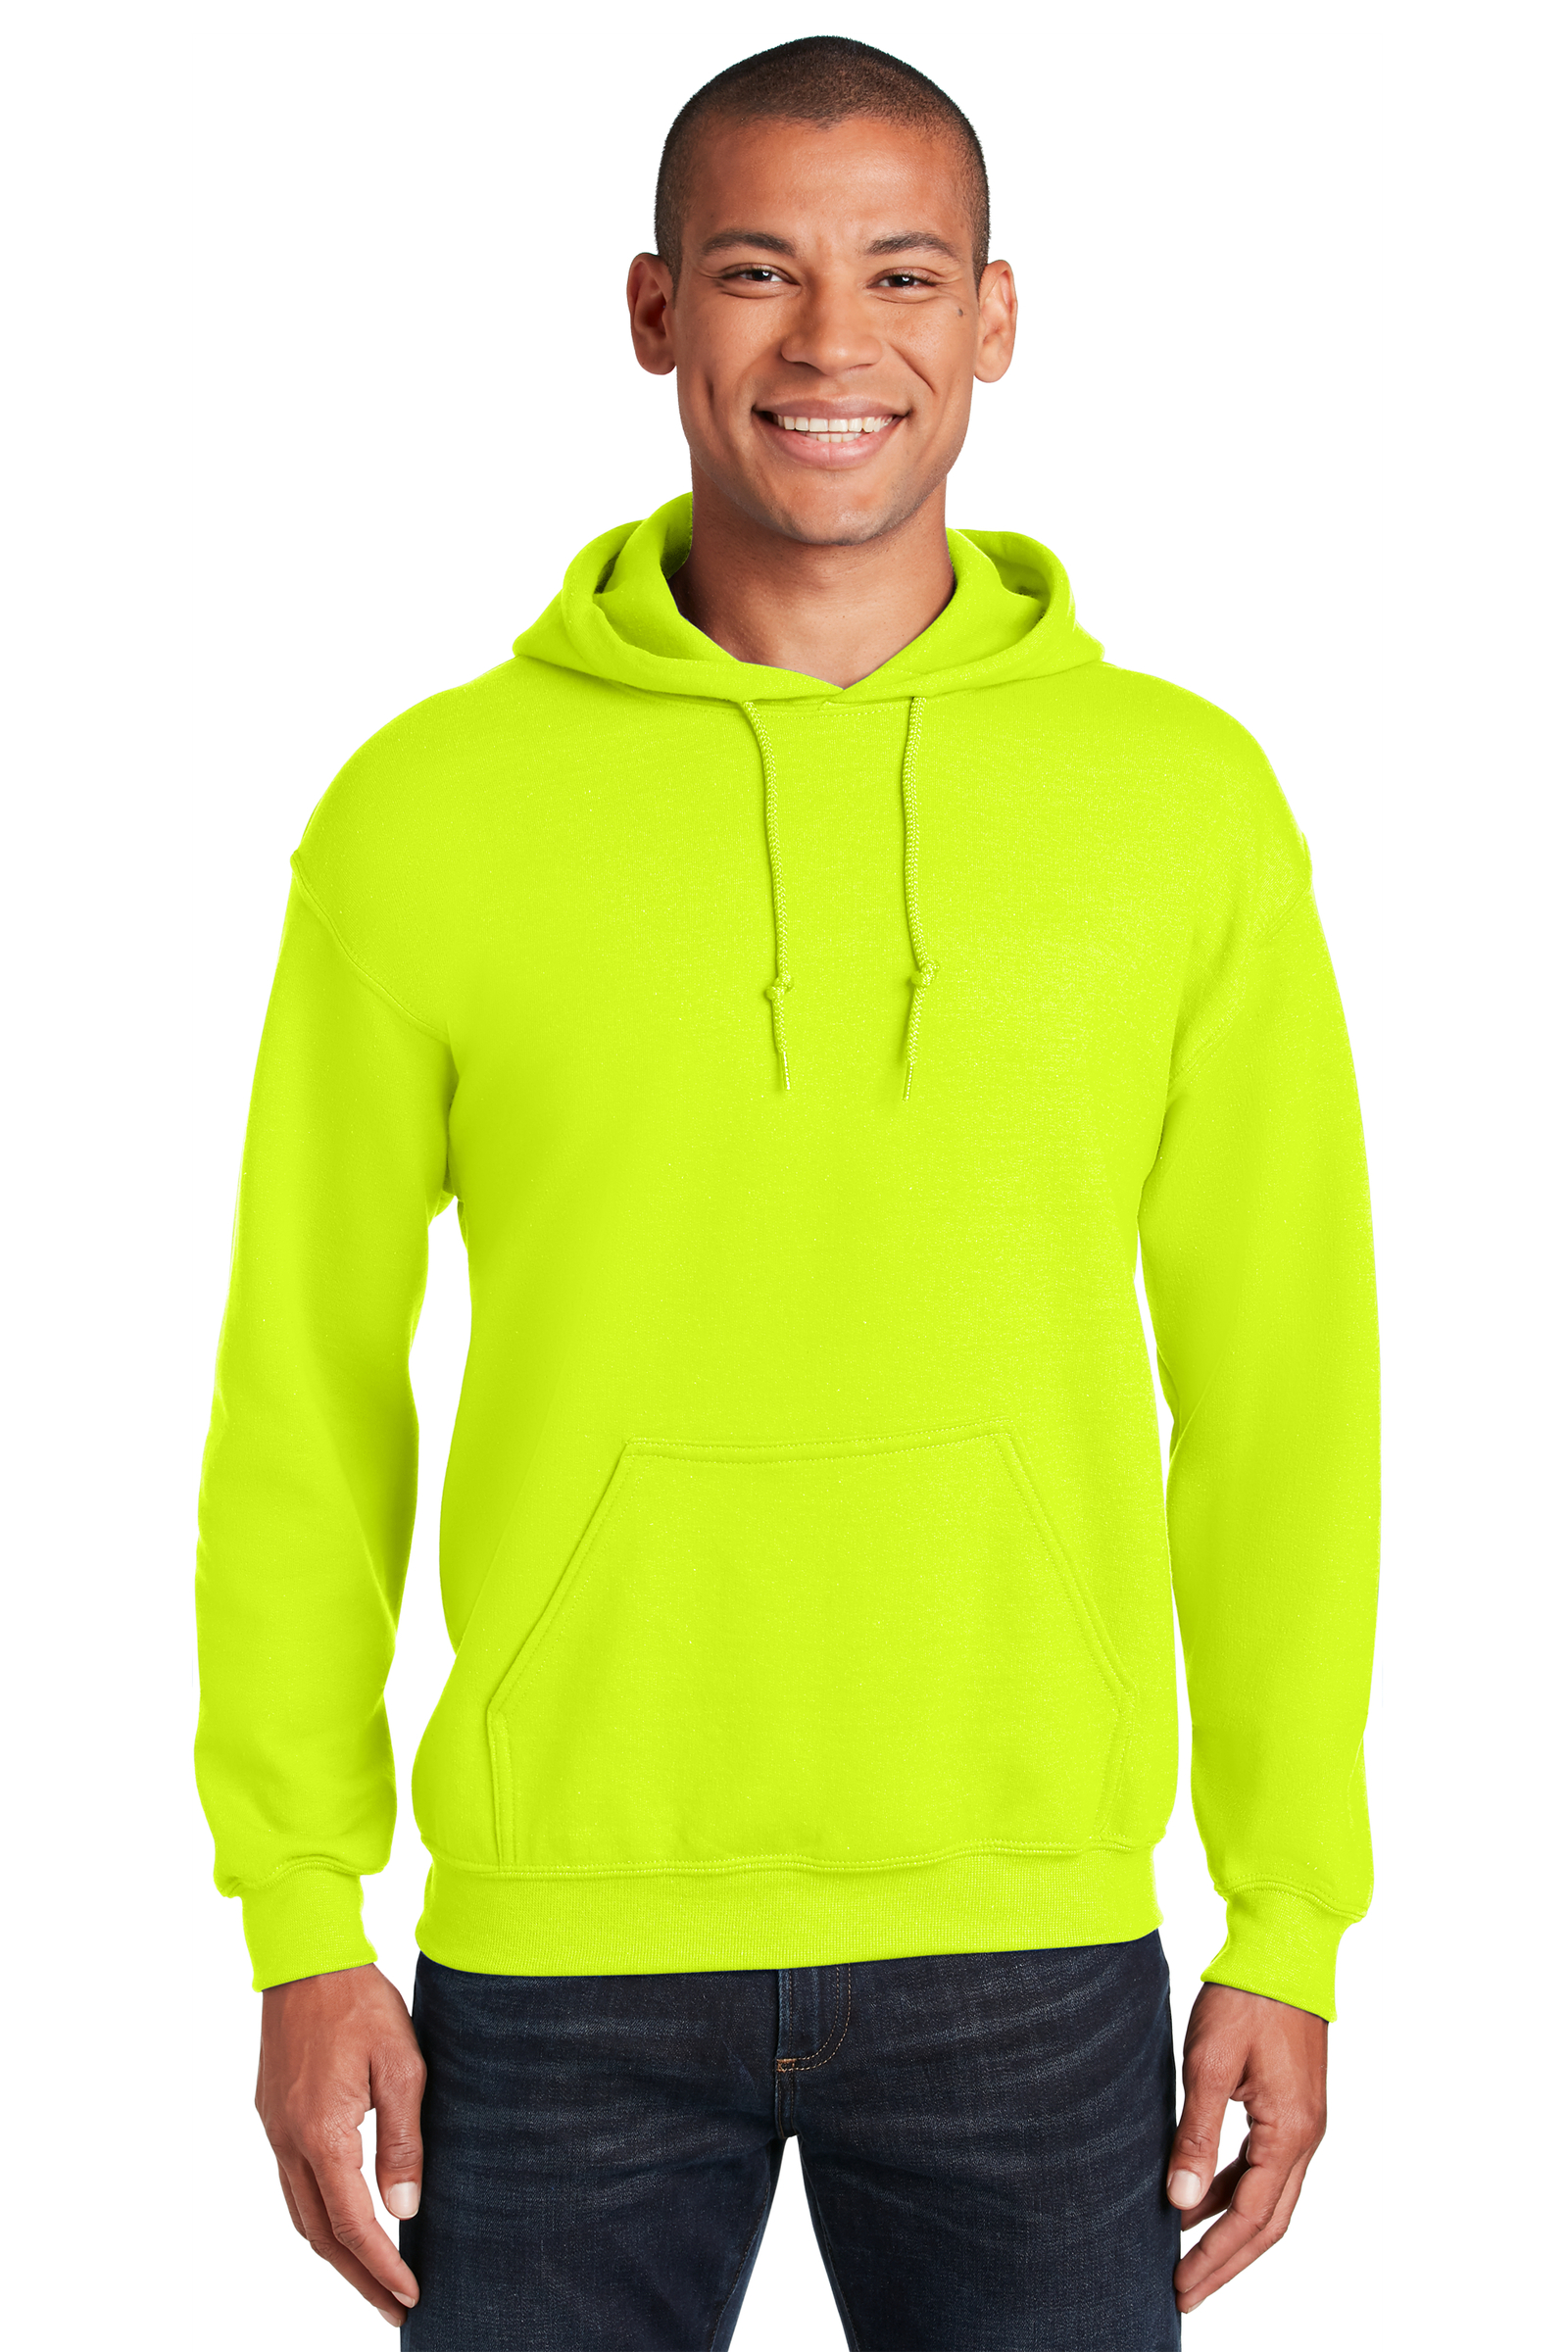 Gildan Embroidered Men's Heavy Blend Pullover Hooded Safety Sweatshirt